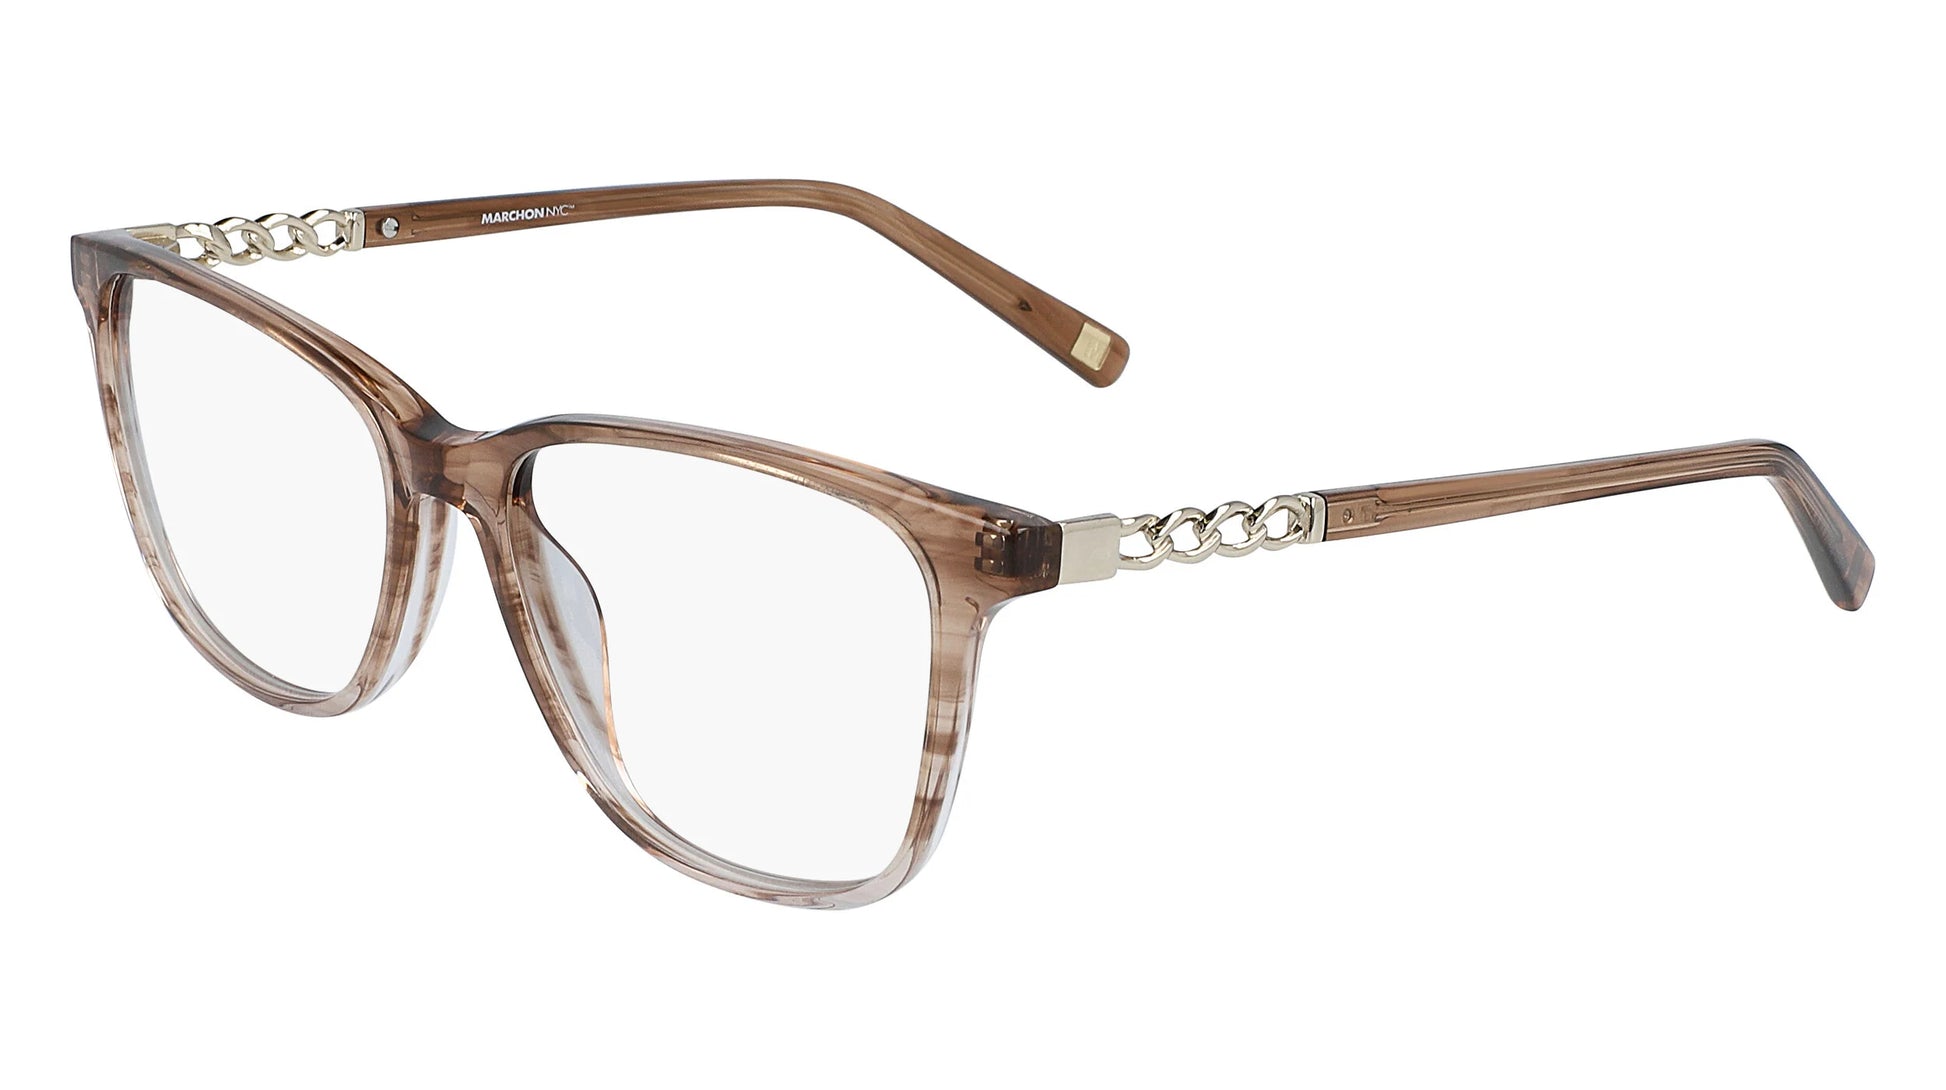 Marchon NYC M-5008 Eyeglasses Brown